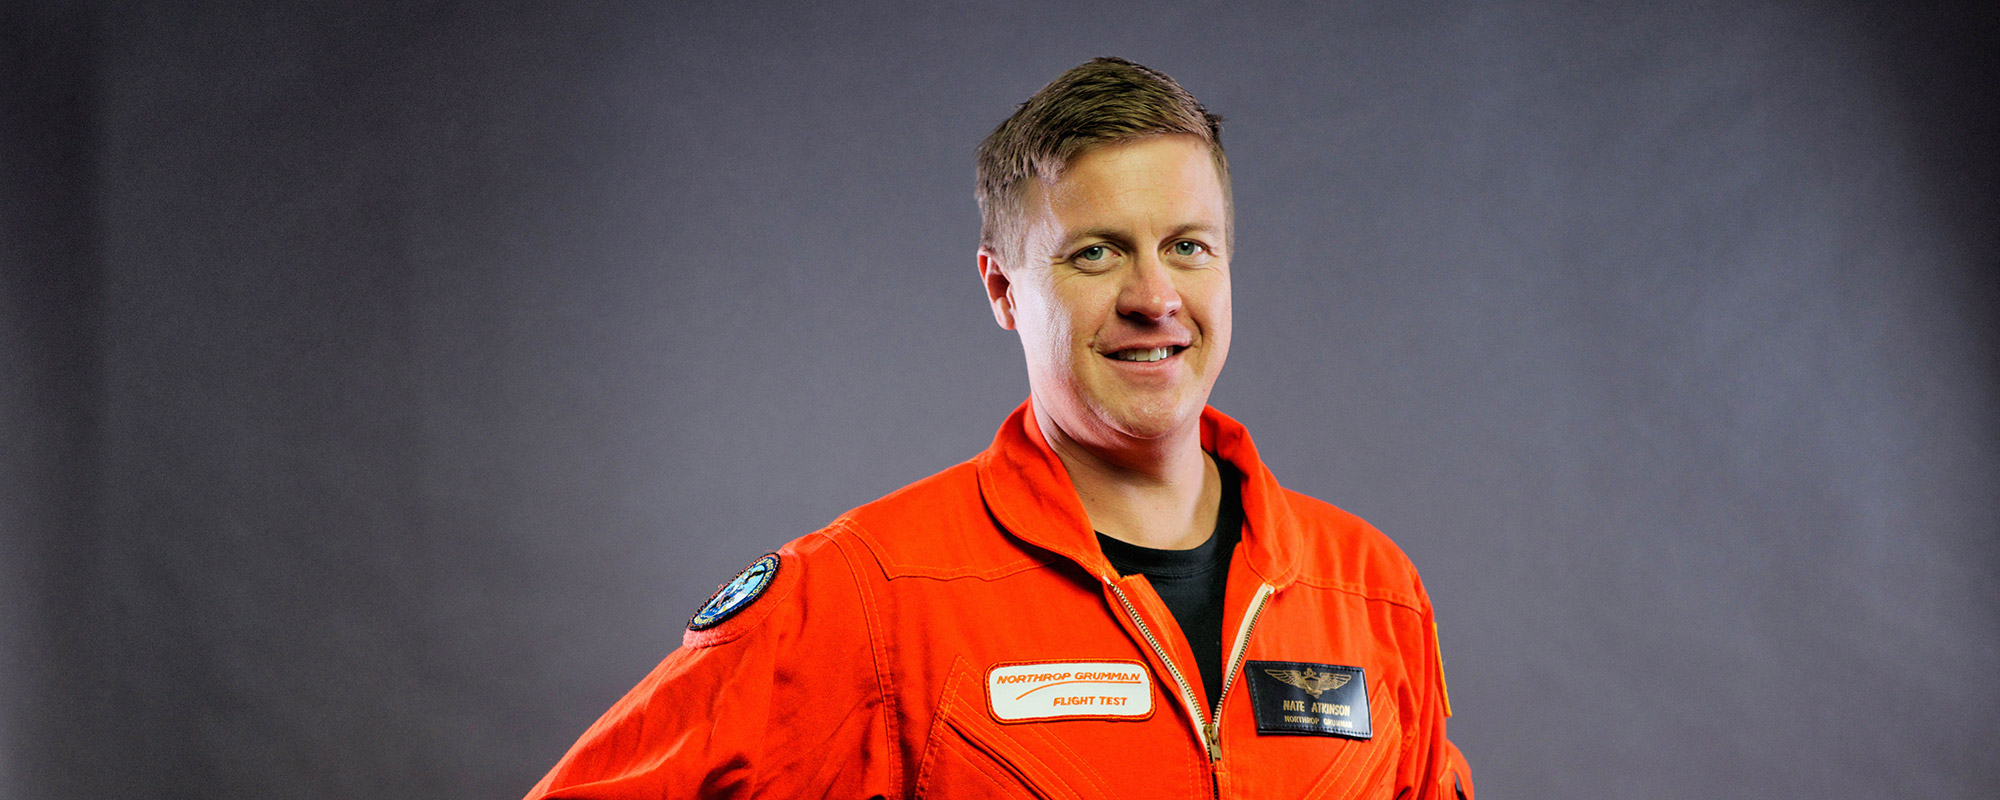 Headshot of man in orange flight suit